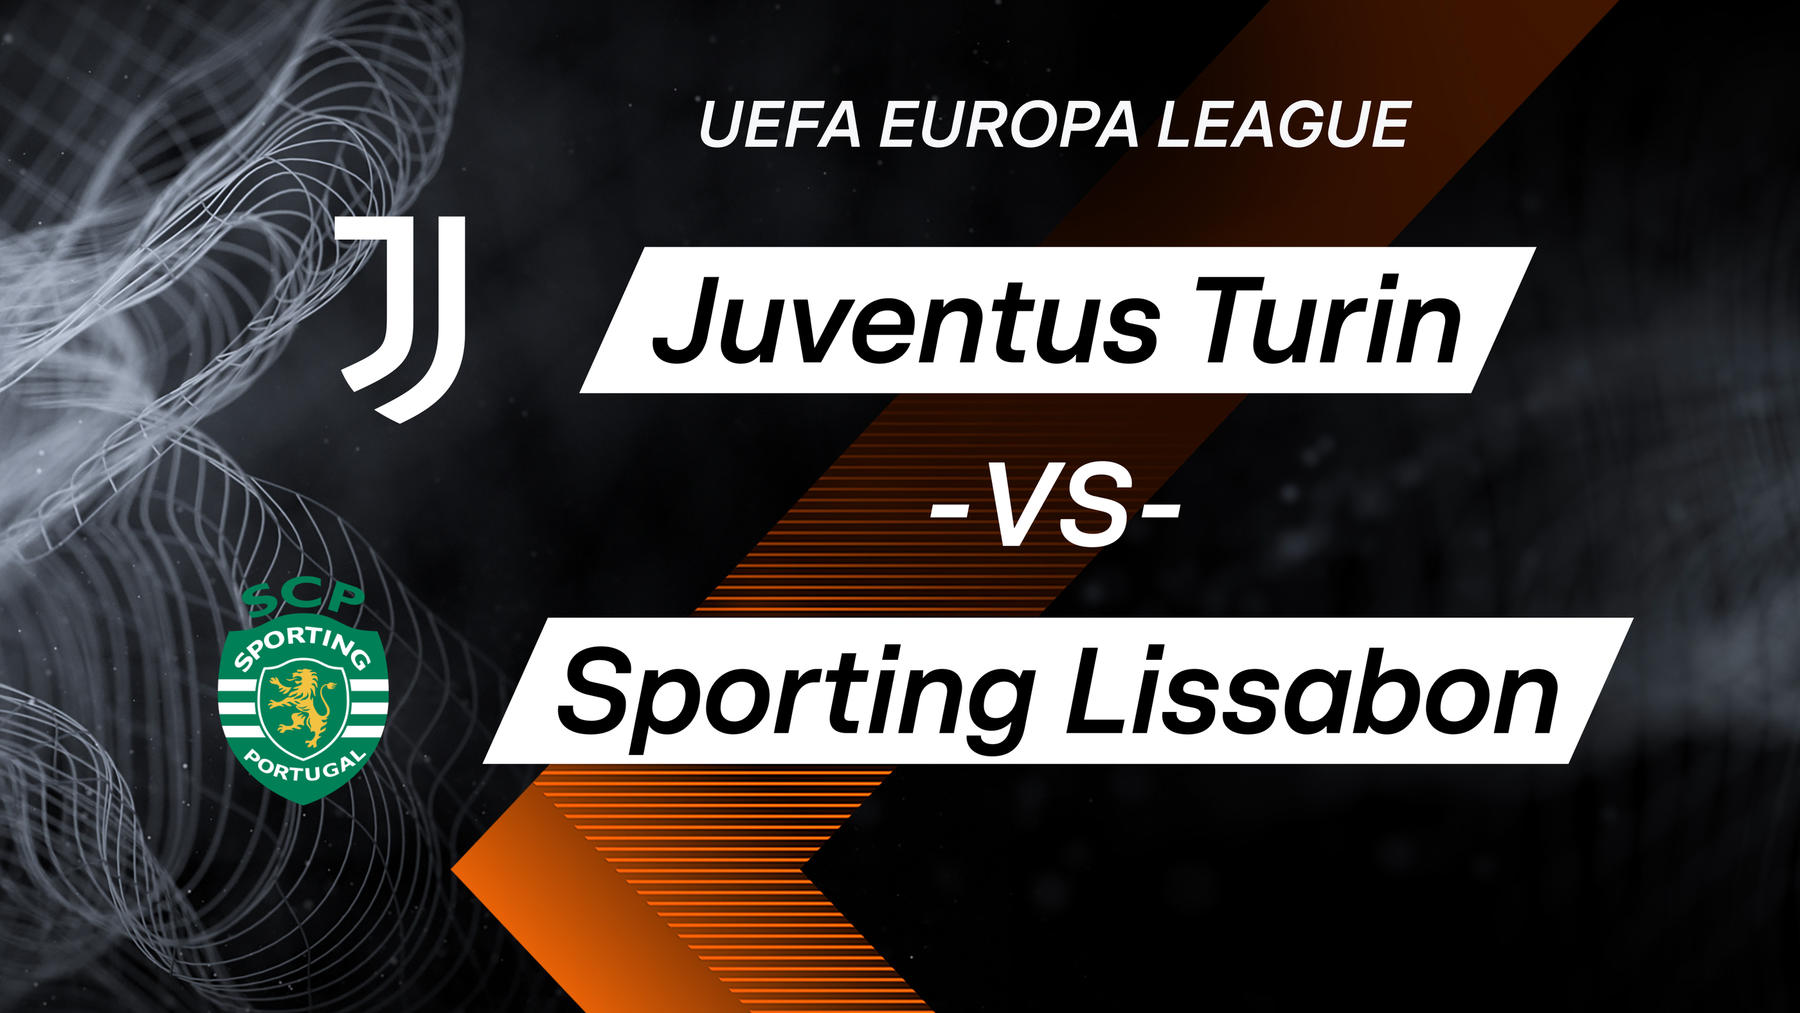 Juventus Turin vs. Sporting Lissabon